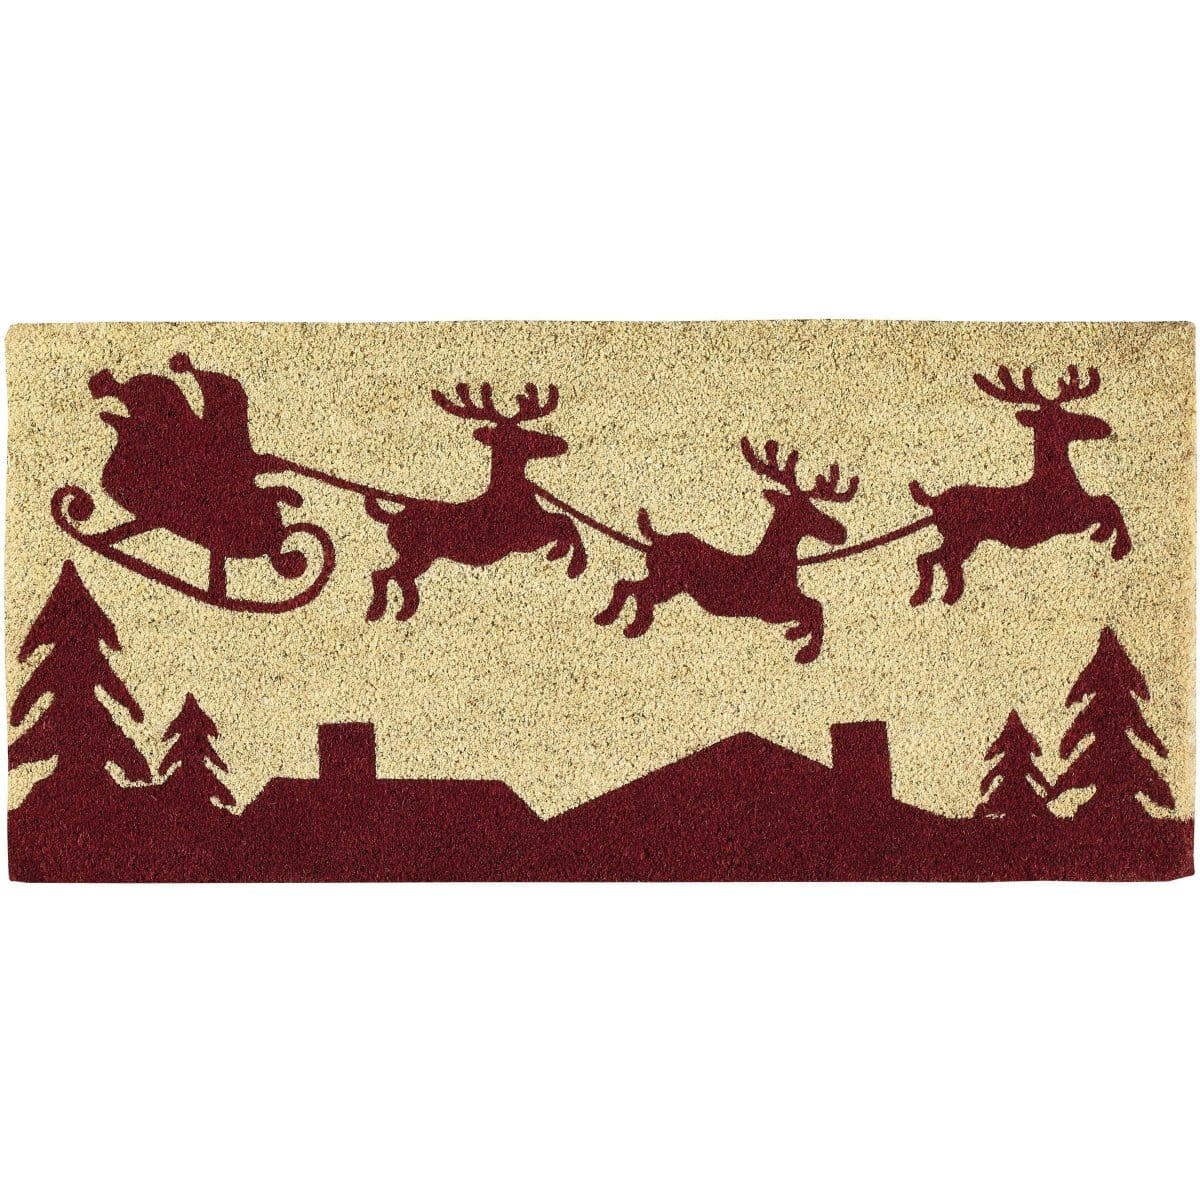 Here Comes Santa Clause Doormat-Park Designs-The Village Merchant